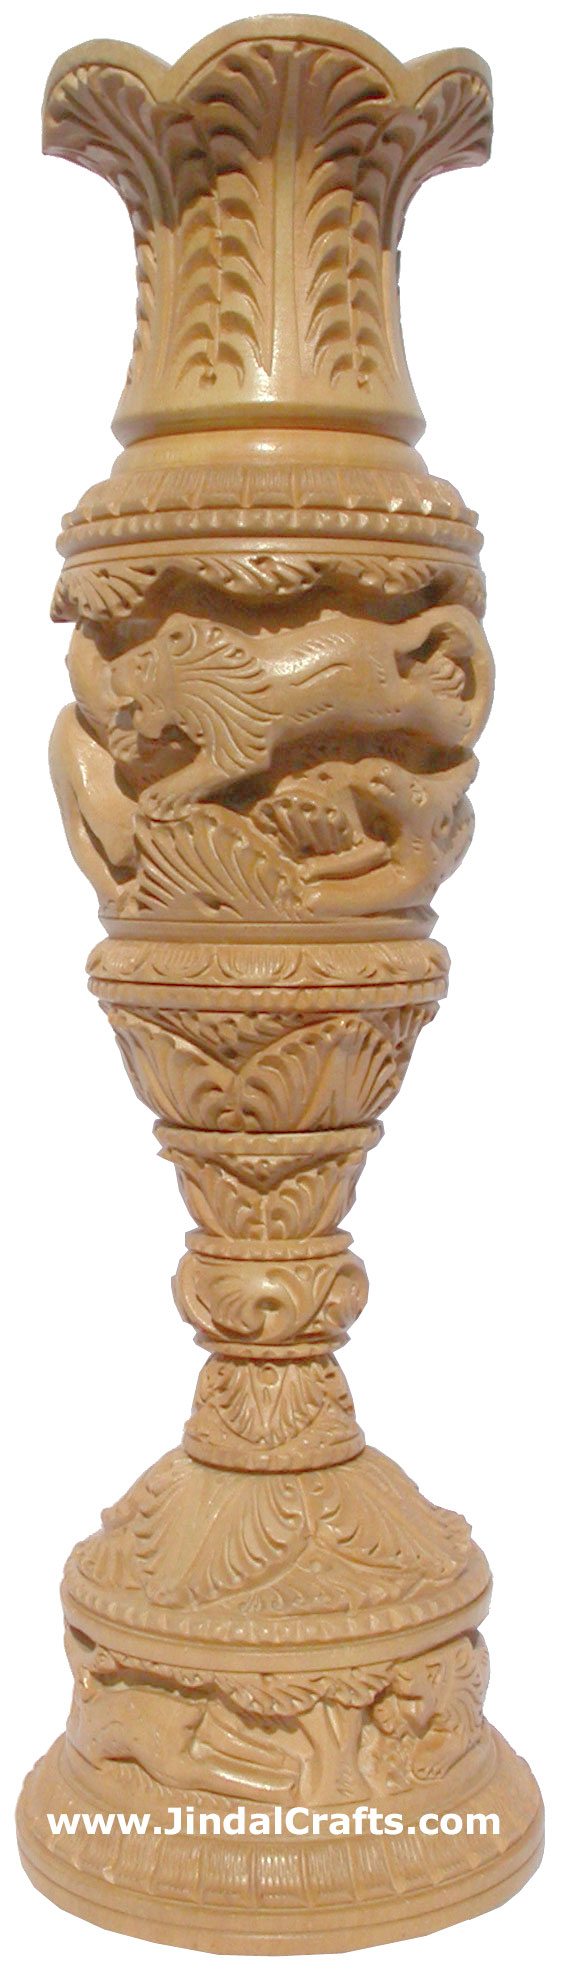 Handmade Wood Lion Jungle Flower Vase India Carving Art Home Decor Artifacts